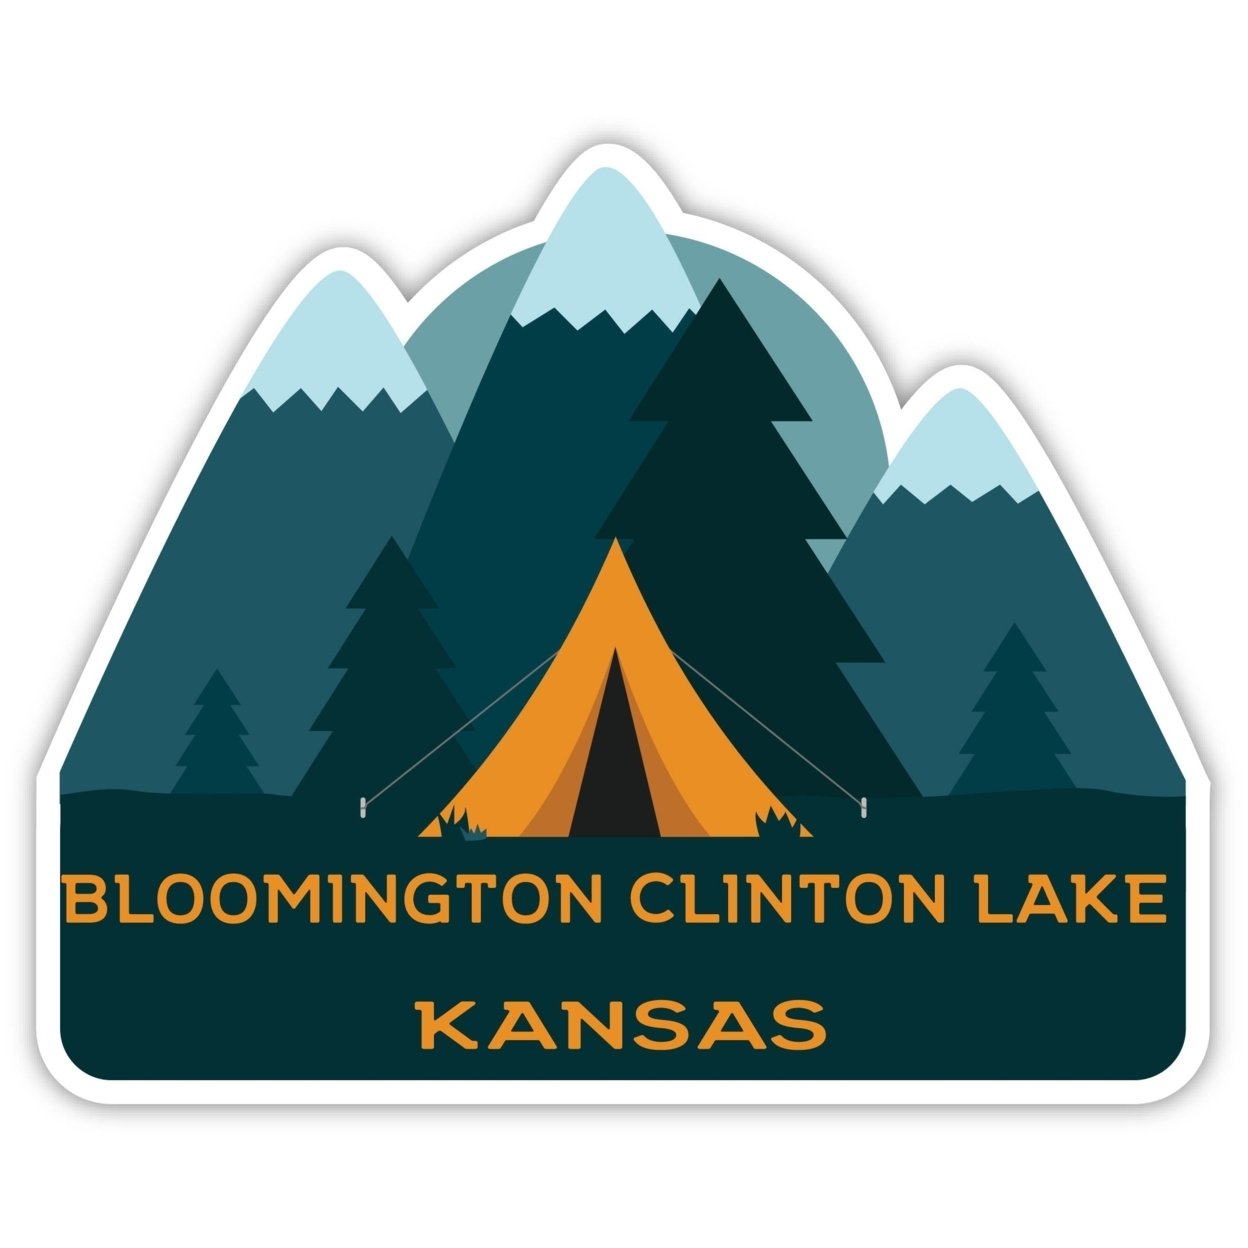 Bloomington Clinton Lake Kansas Souvenir Decorative Stickers (Choose Theme And Size) - 4-Pack, 10-Inch, Tent